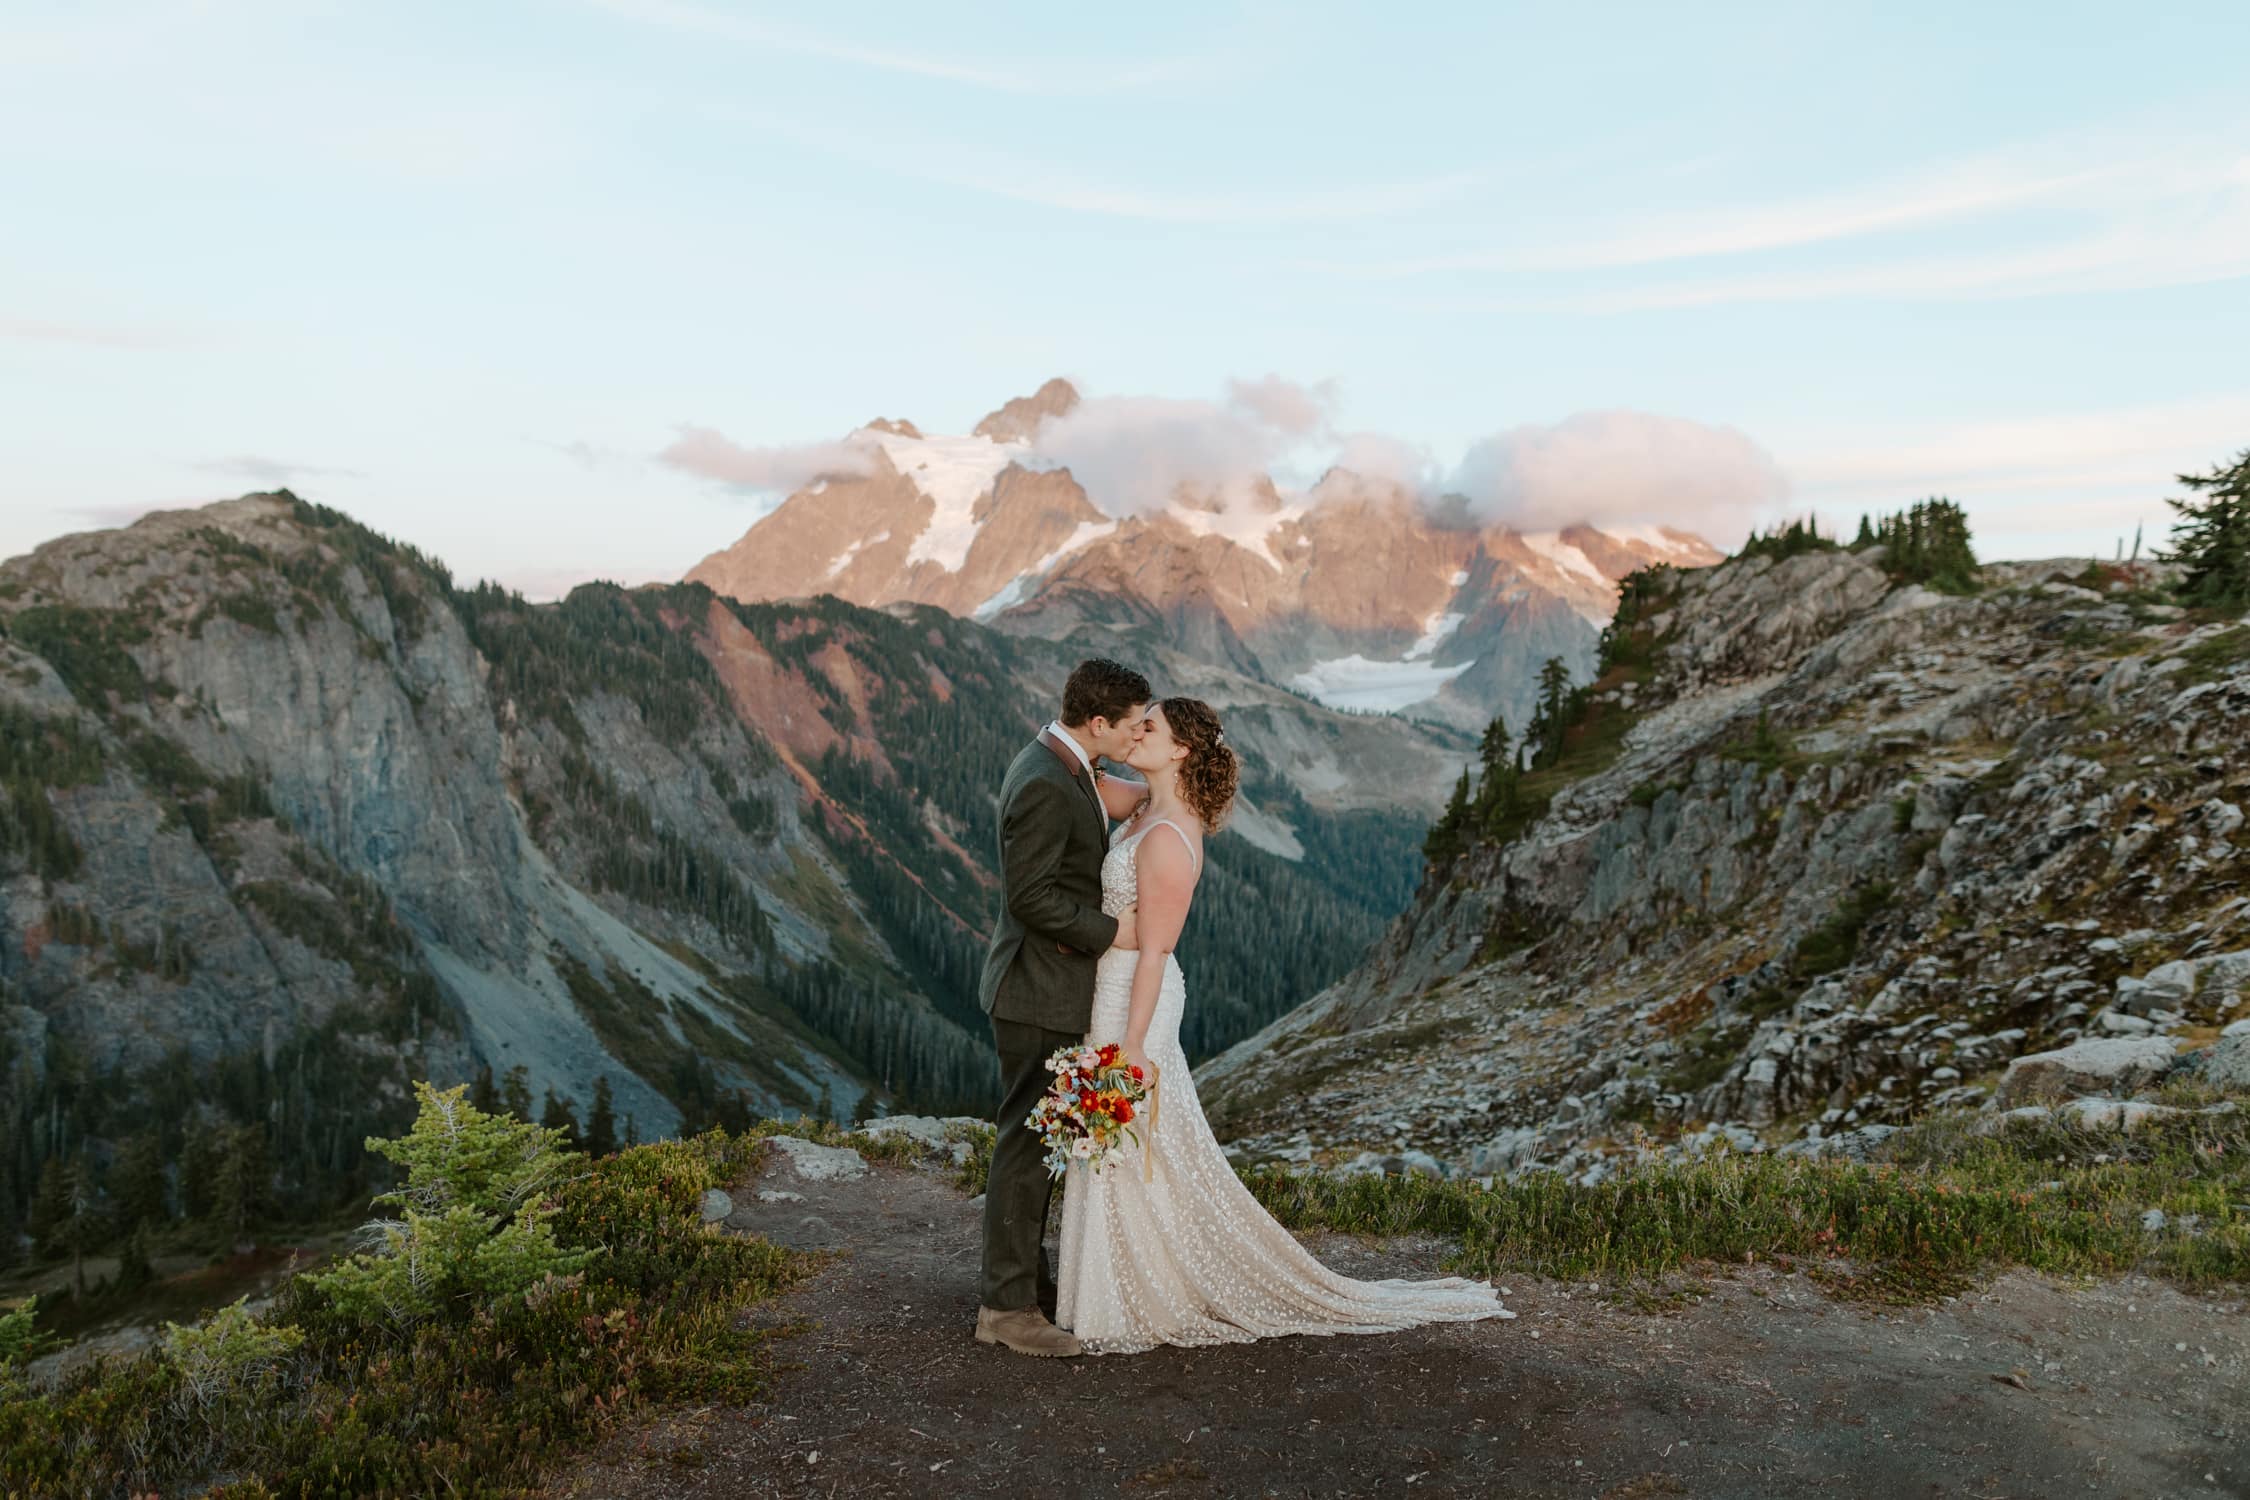 A couple in wedding attire kissing in front of Mt. Shuskan.